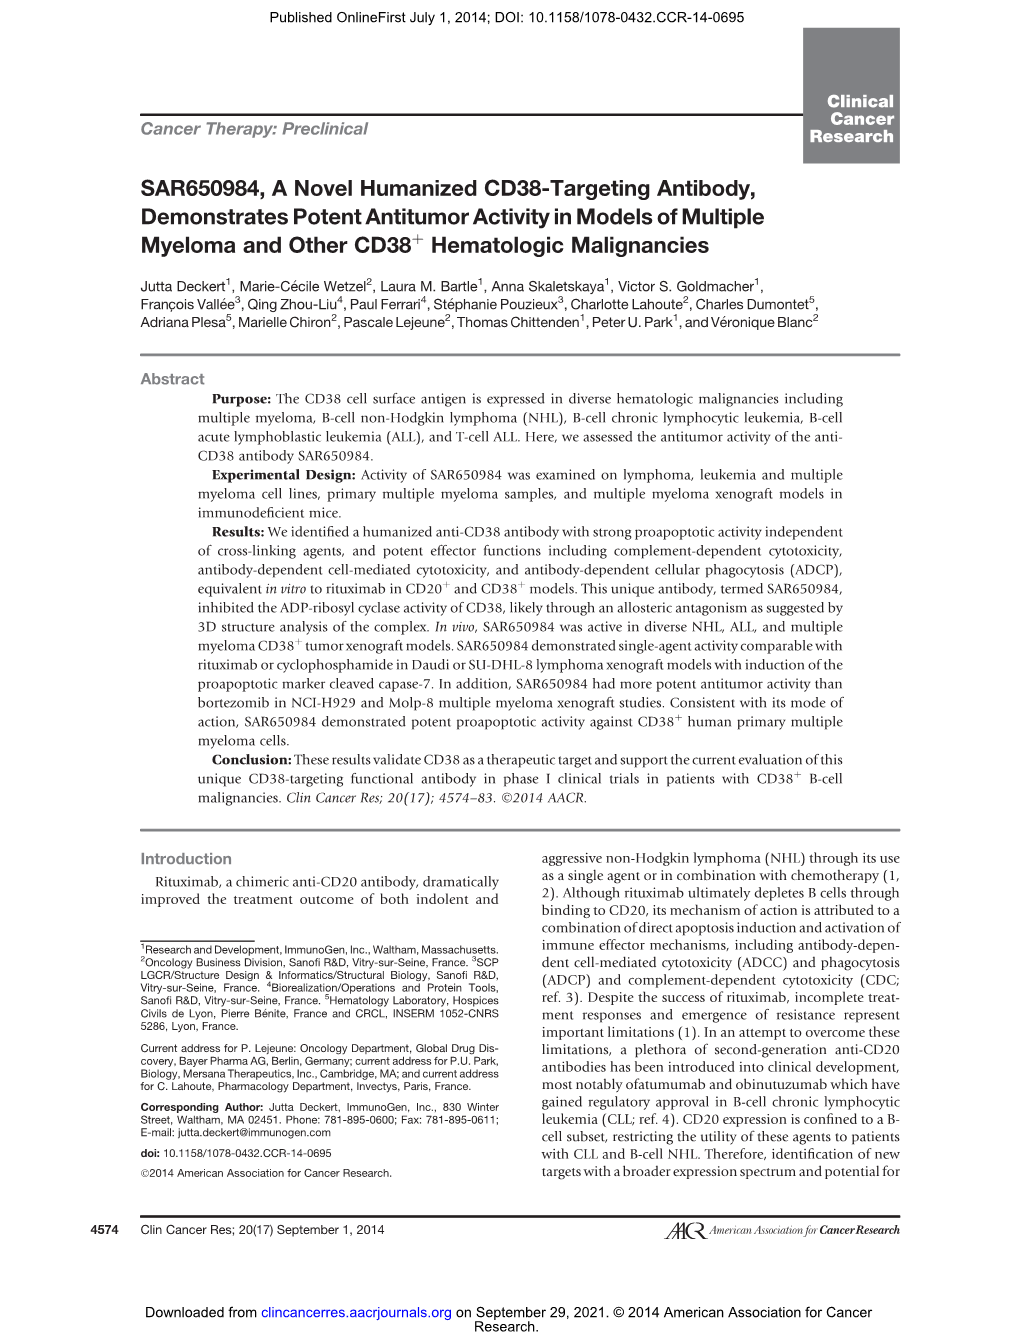 SAR650984, a Novel Humanized CD38-Targeting Antibody, Demonstrates Potent Antitumor Activity in Models of Multiple Myeloma and Other Cd38þ Hematologic Malignancies